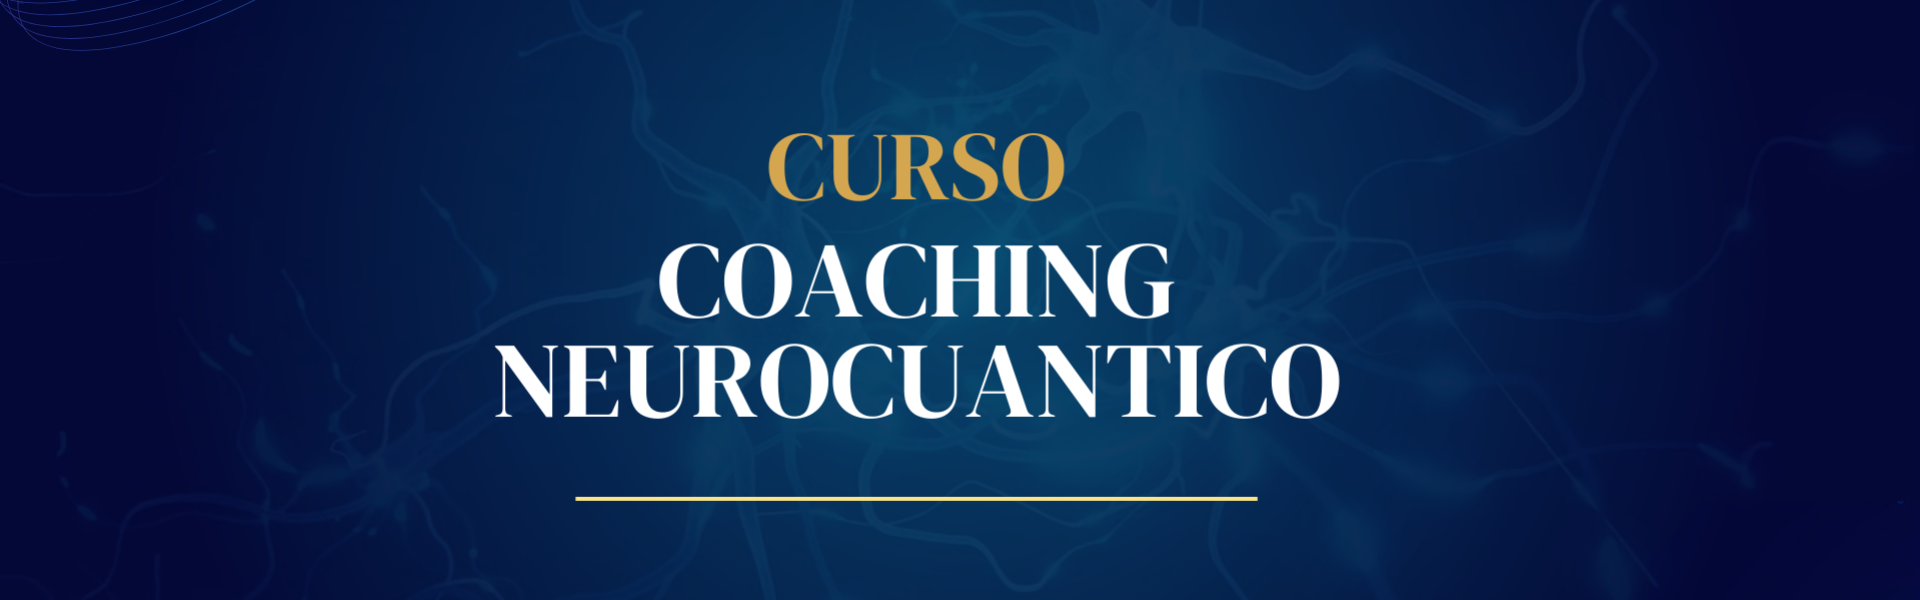 CURSO COACHING NEUROCUANTICO - Clase 1 thumbnail